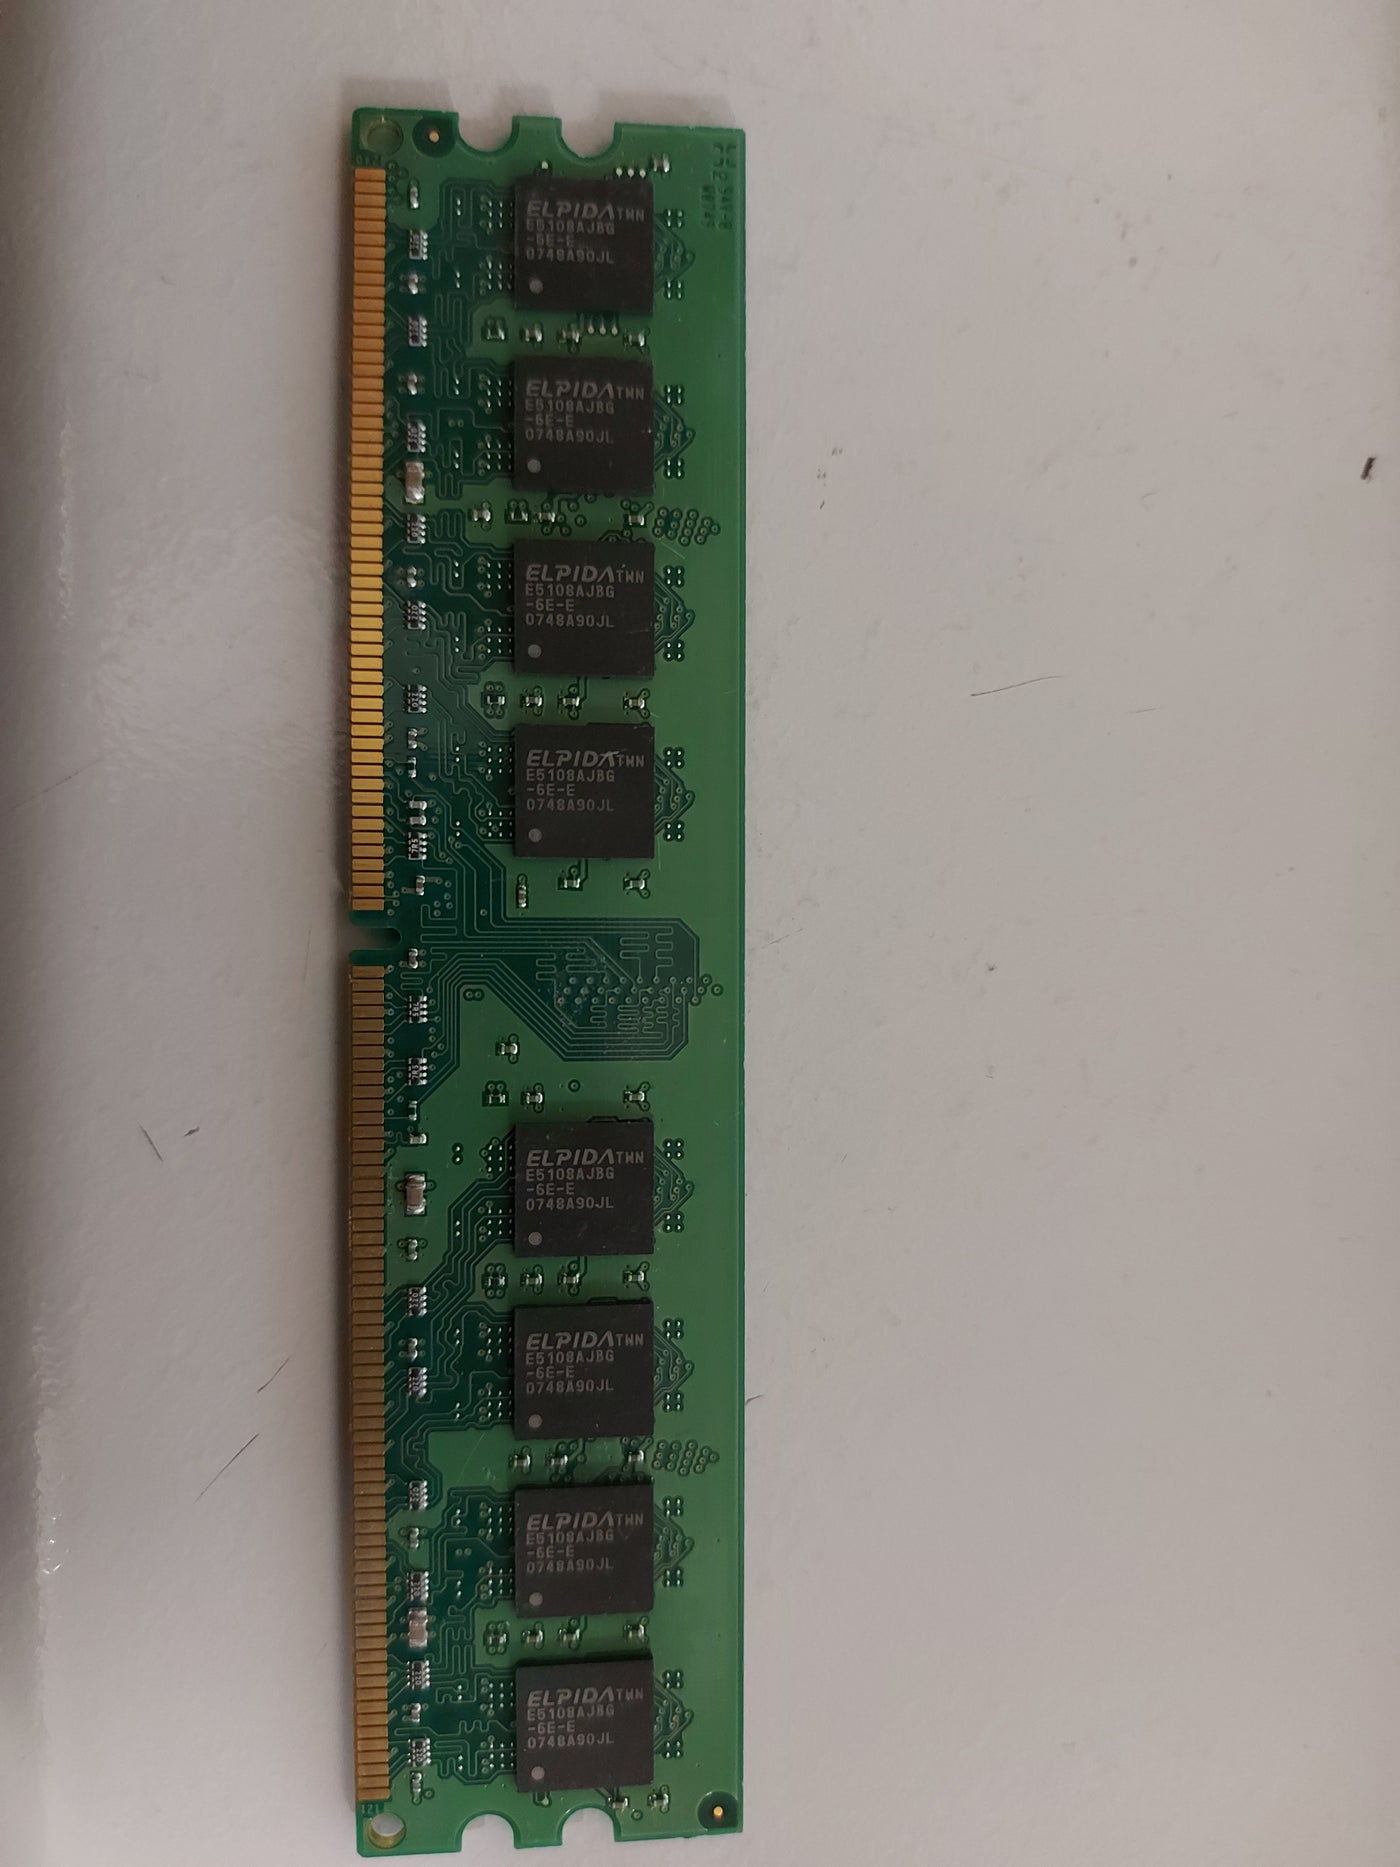 Kingston 1GB DDR2 667Mhz Non ECC Memory RAM DIMM KVR667D2N5/1G 9905316-005